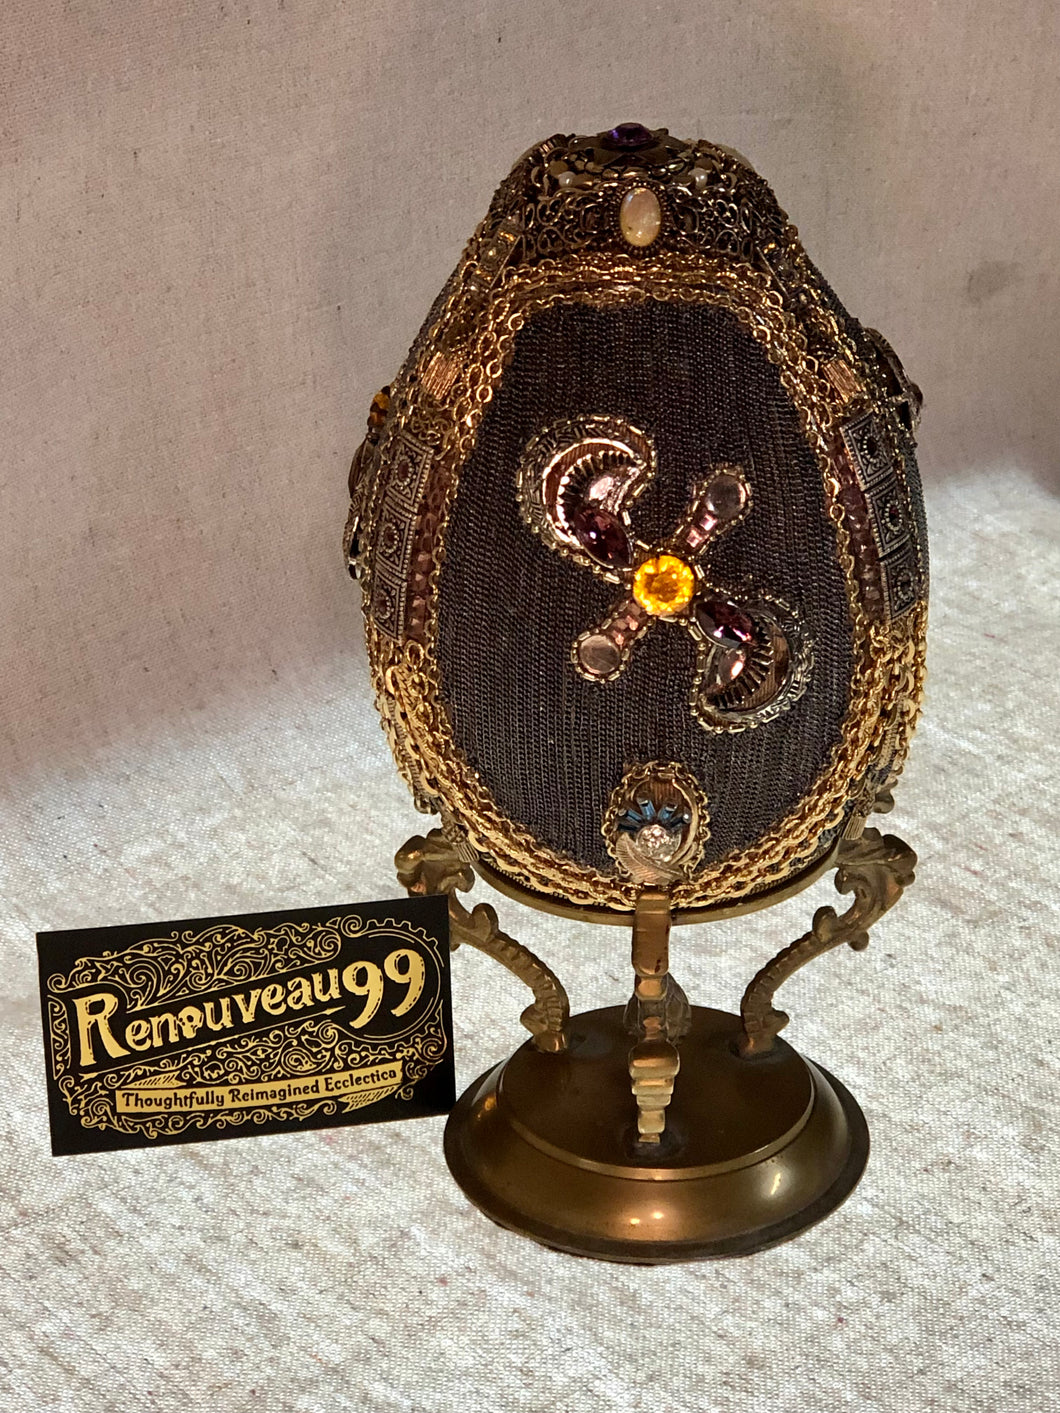 Chandra Dragon Egg Jewelry Sculpture